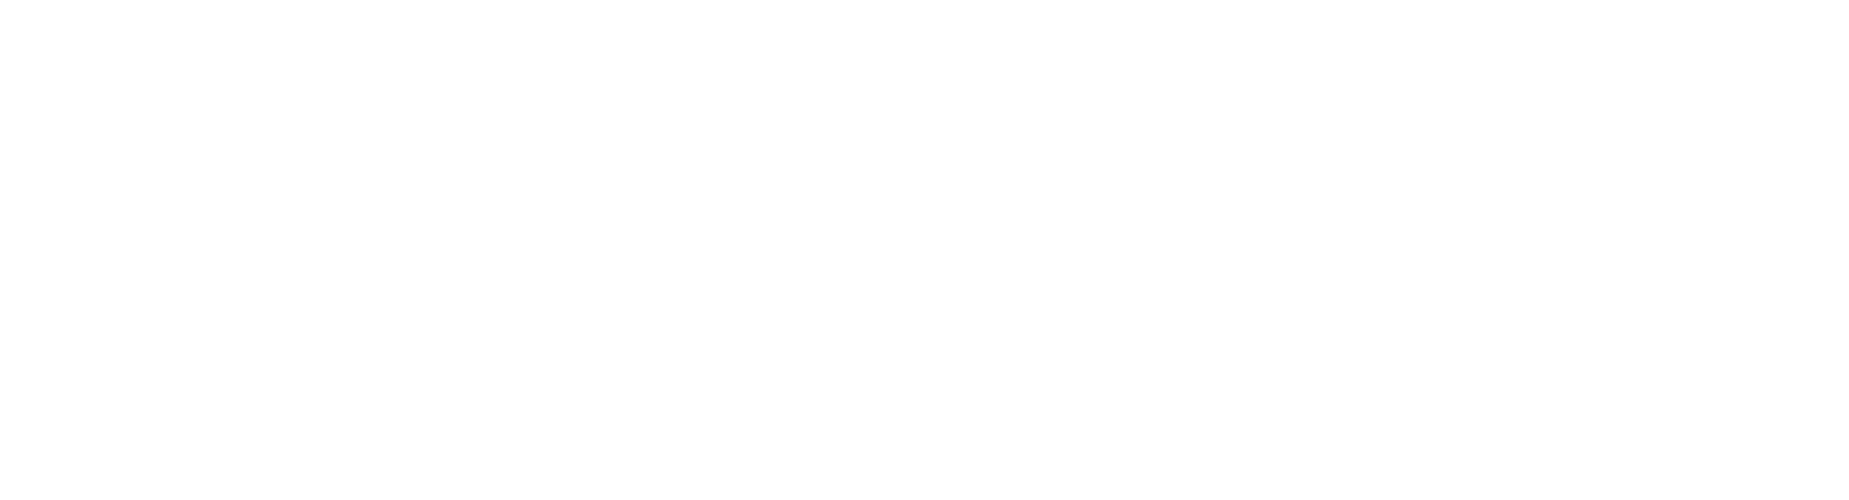 Alpha & Omega Construction, Fencing & Decking, Inc. Logo